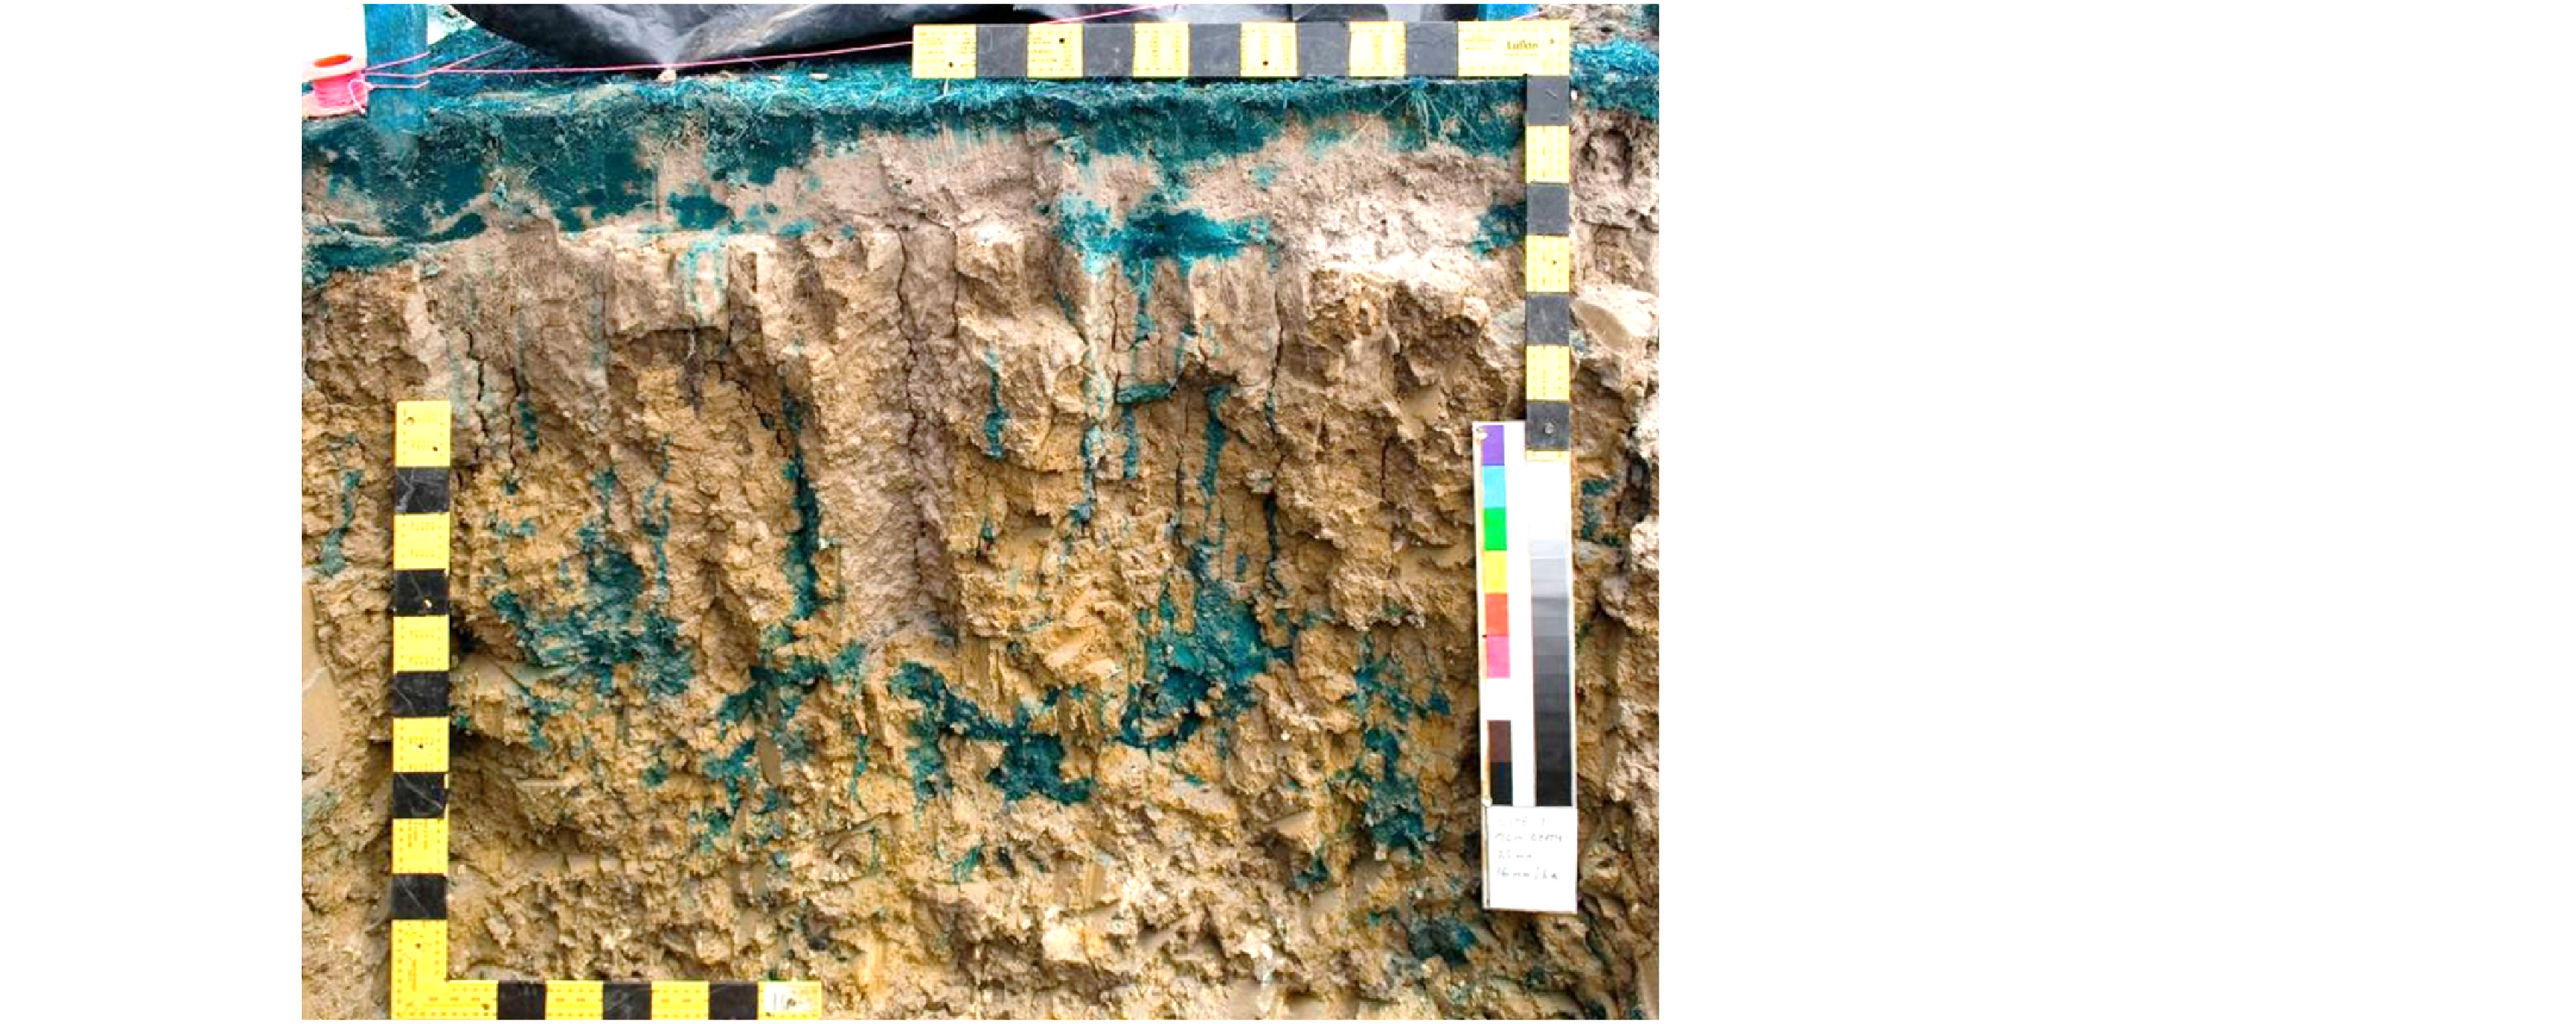 Figure 10. Preferential flow (blue dye) in the subsoil of a Tasmanian duplex soil. Photograph by Marcus Hardie.